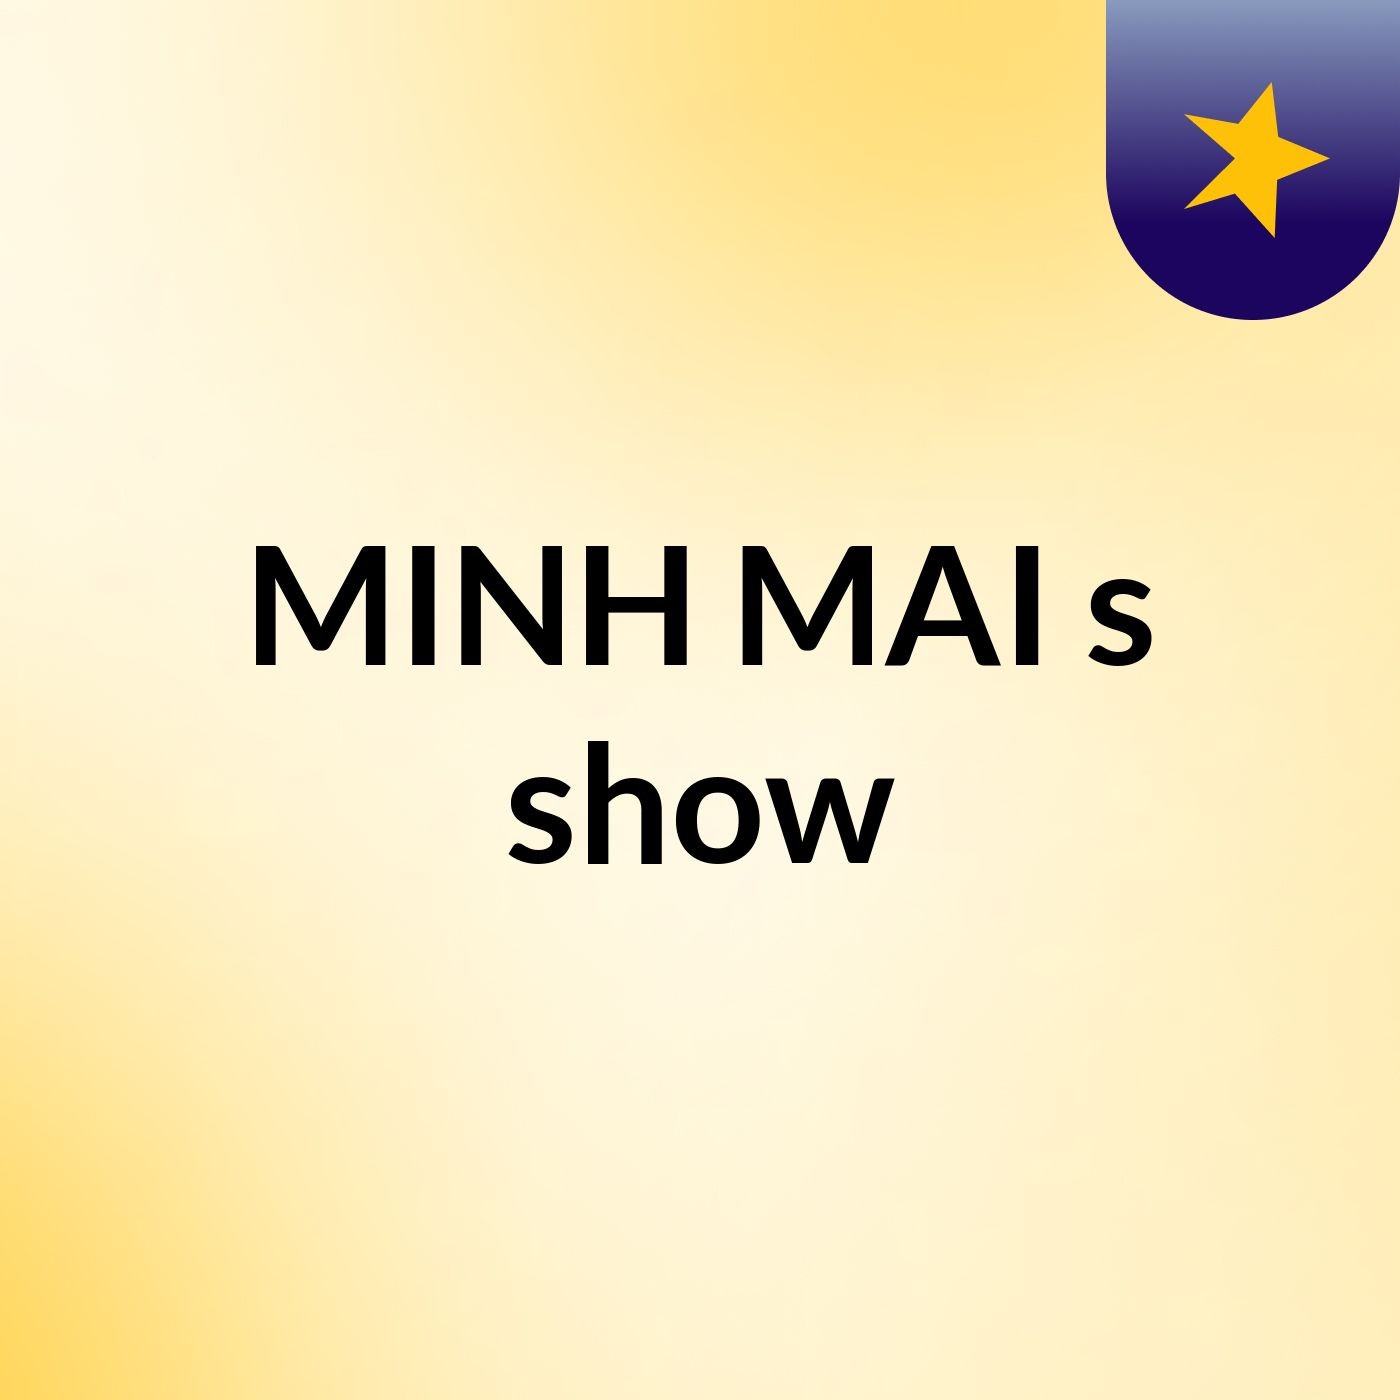 MINH MAI's show